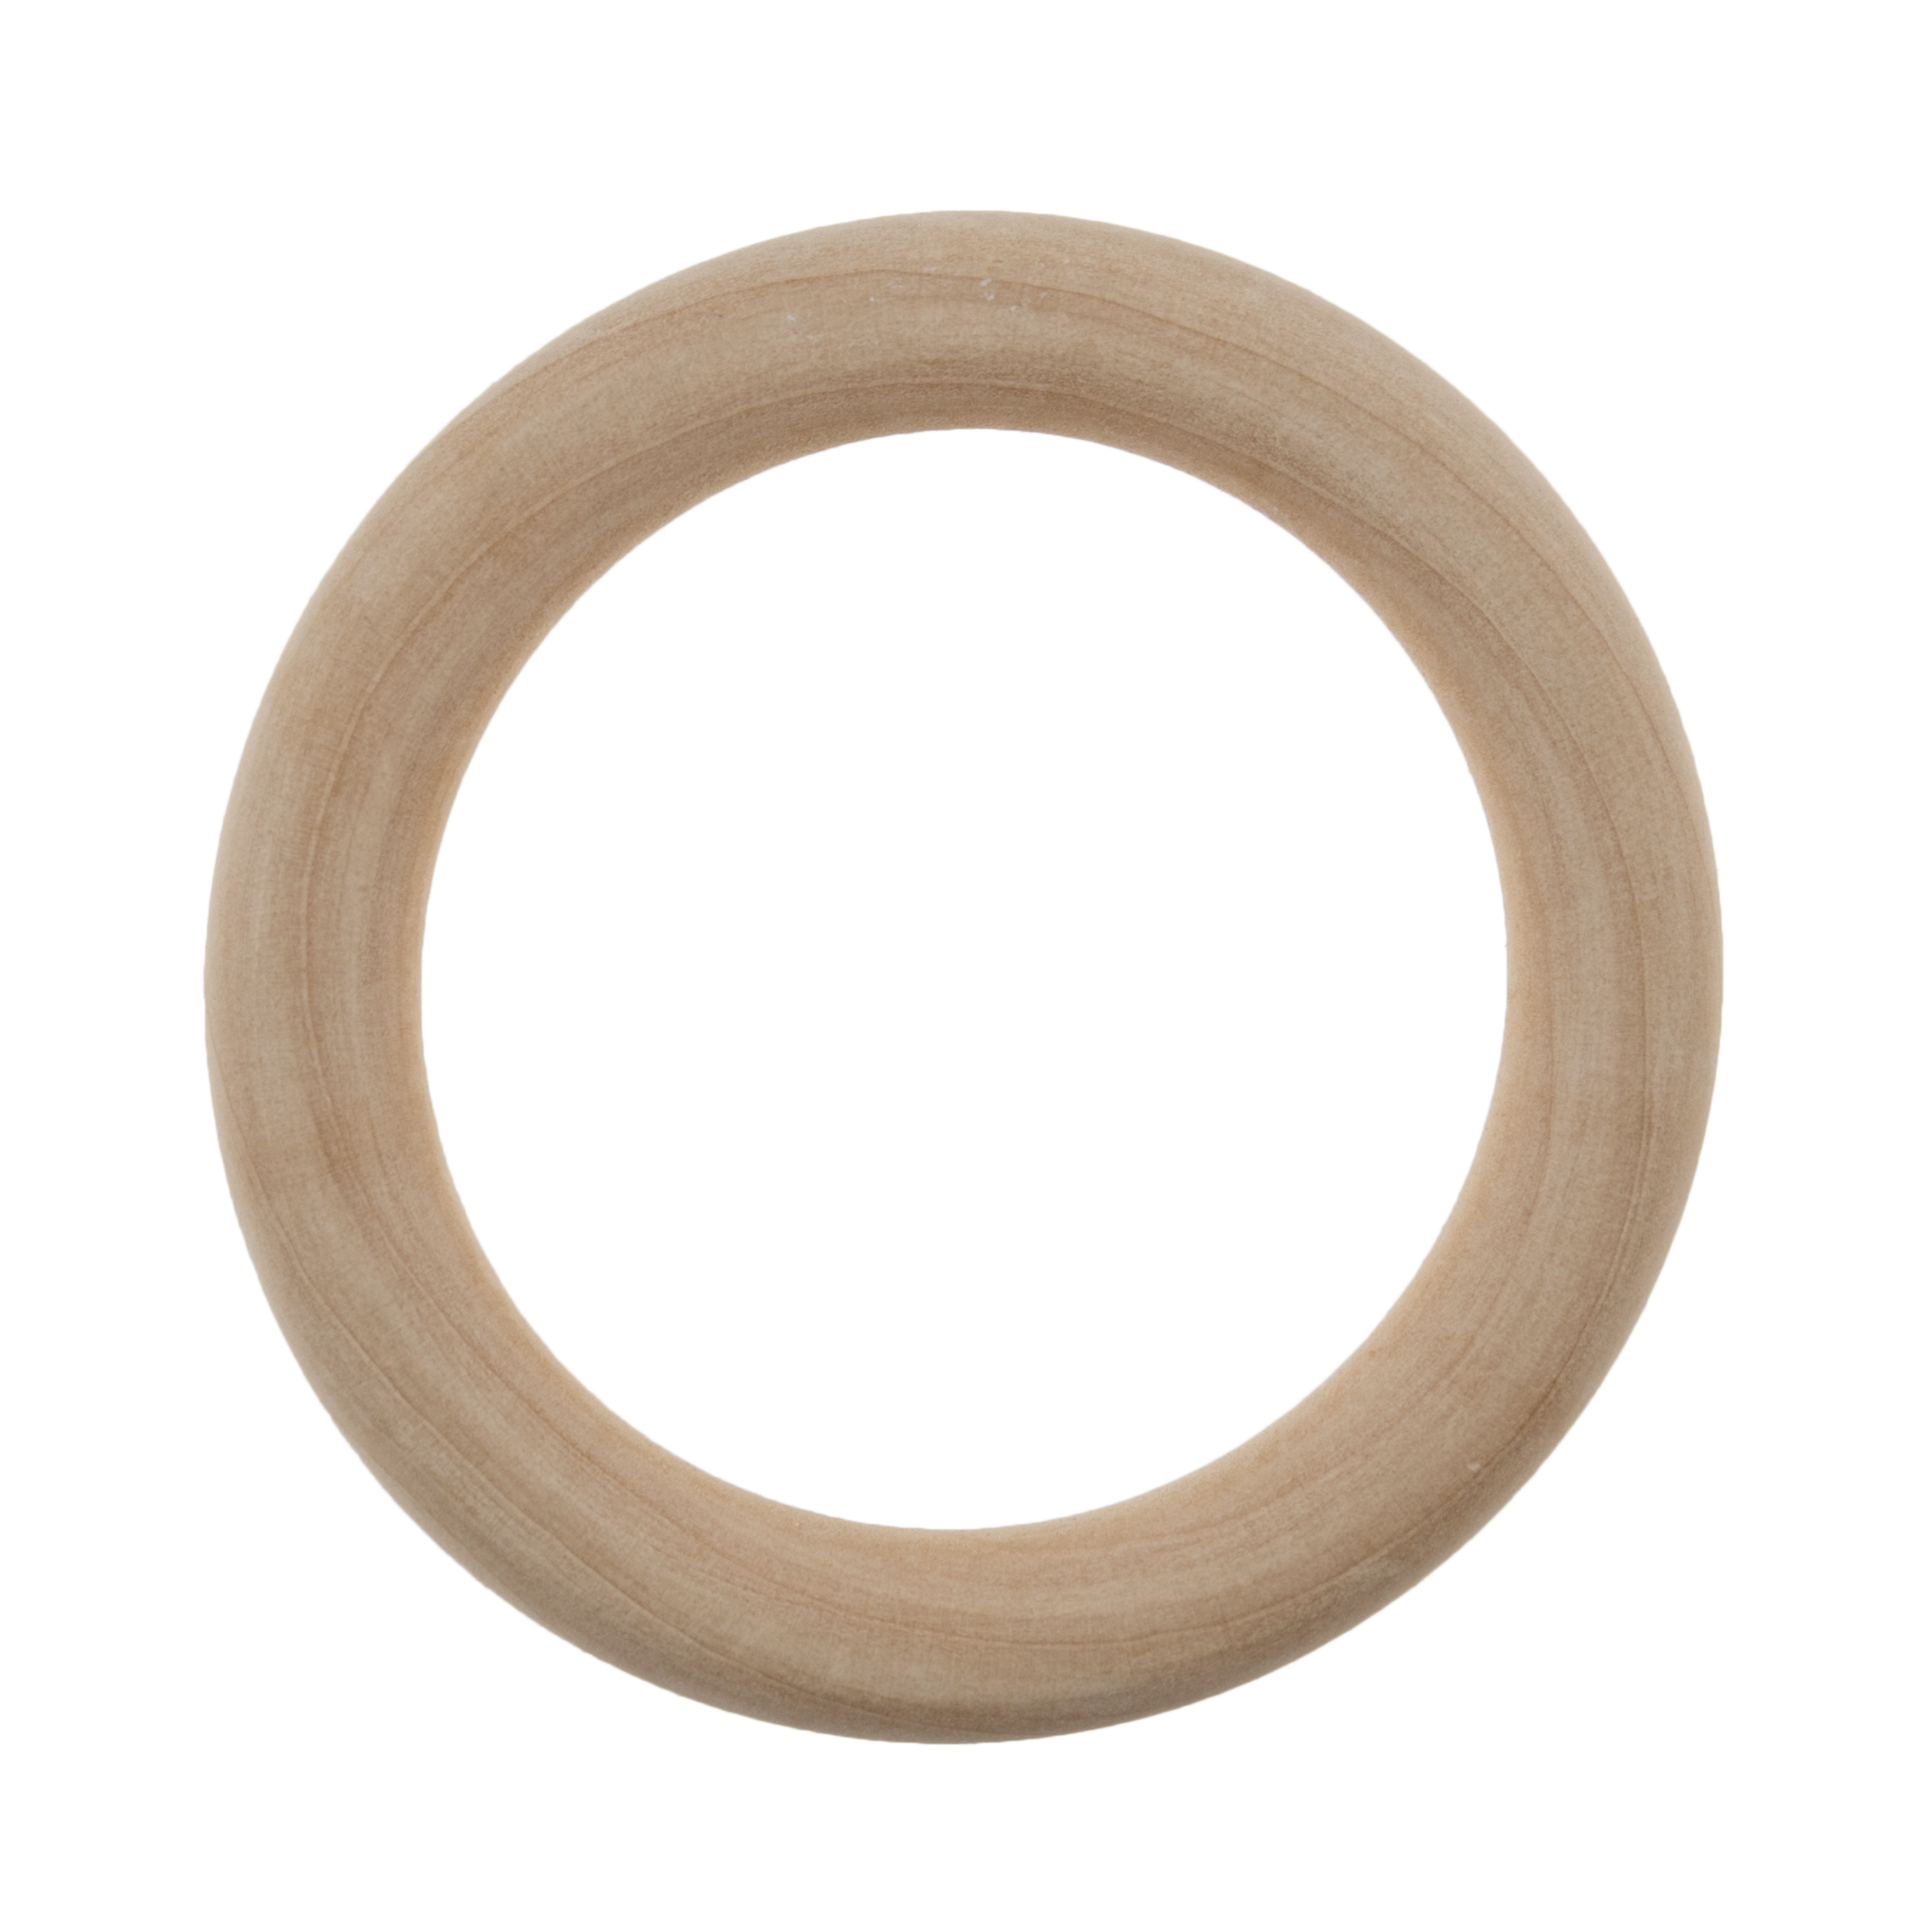 Picture of Craft Ring: Wooden: Round: 7cm Diameter